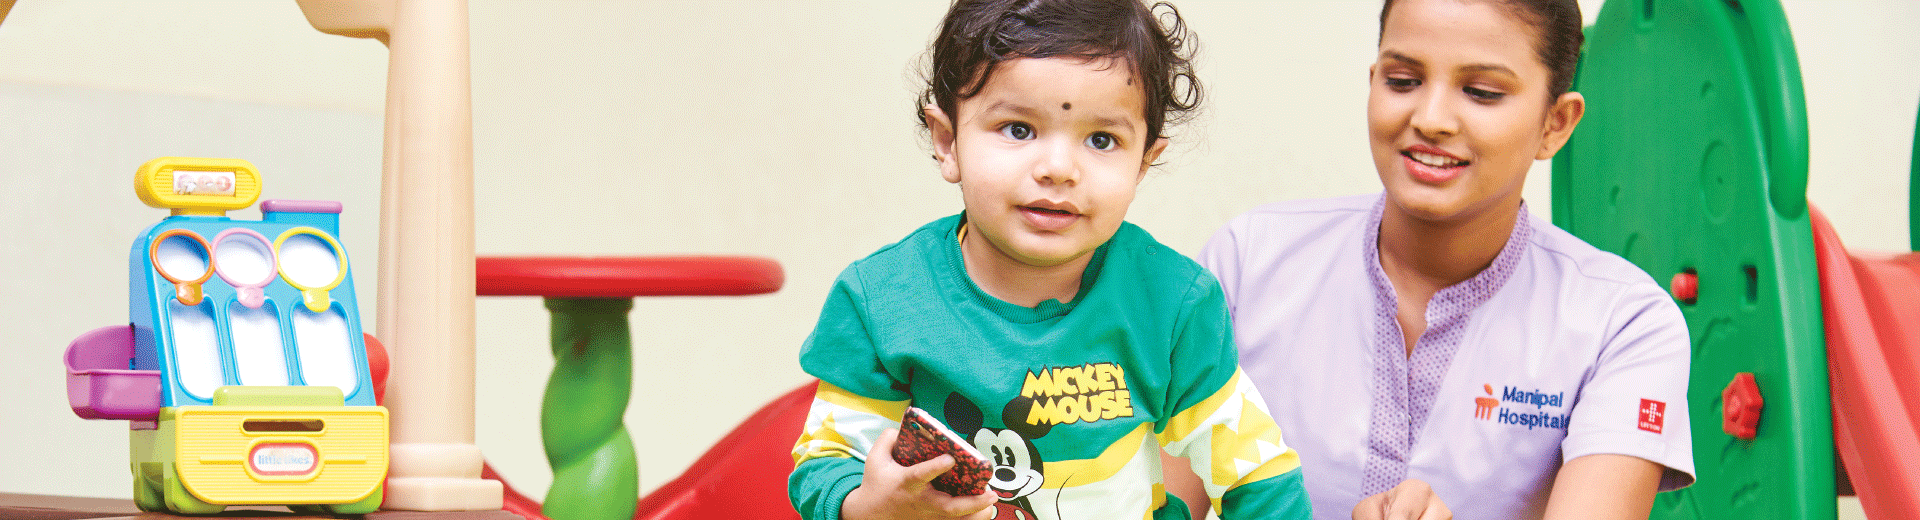 Developmental Pediatrics | Best Pediatric Hospital in India - Manipal